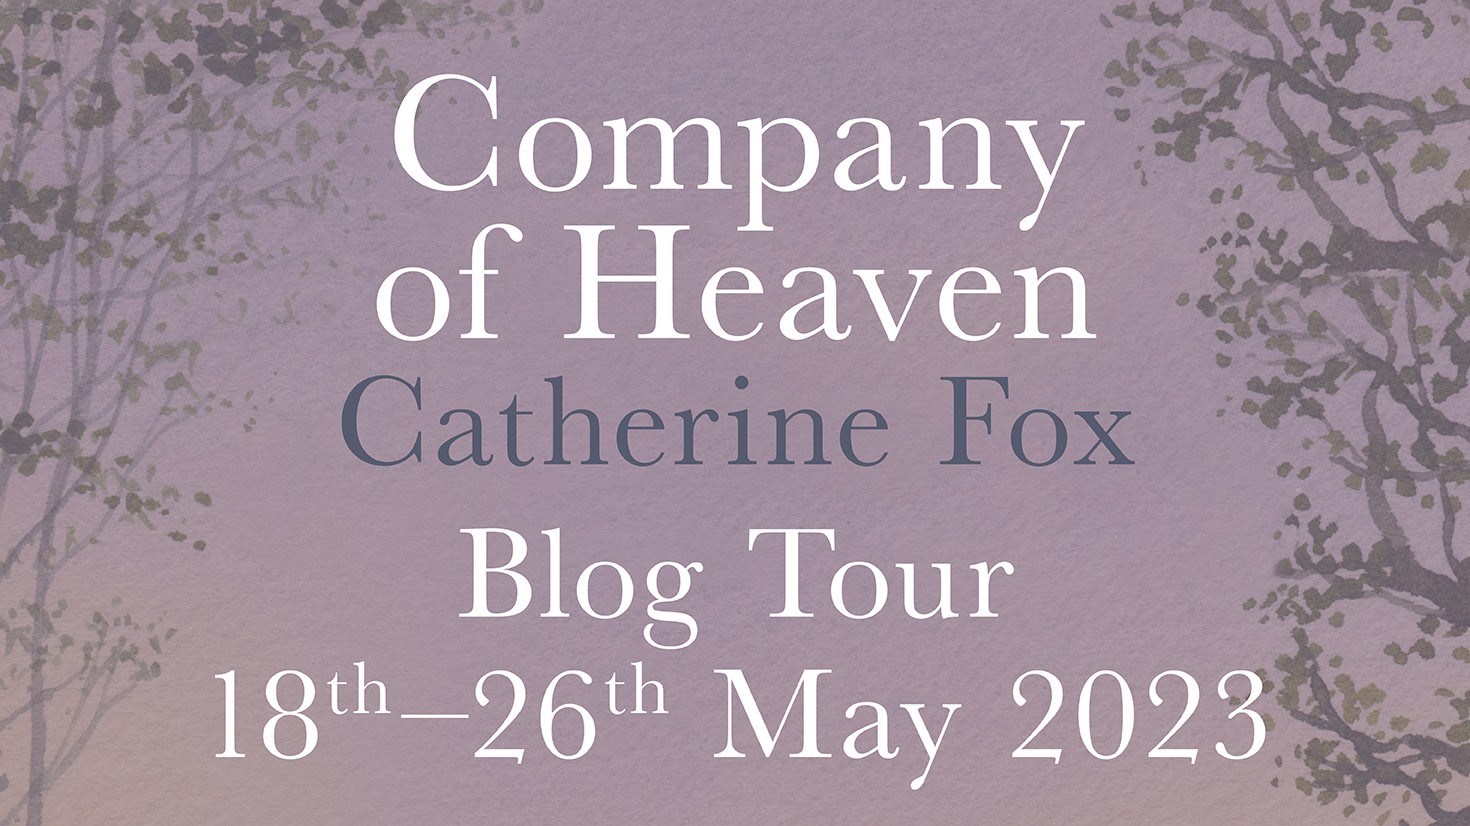 The Company of Heaven Catherine Fox Blog Tour 